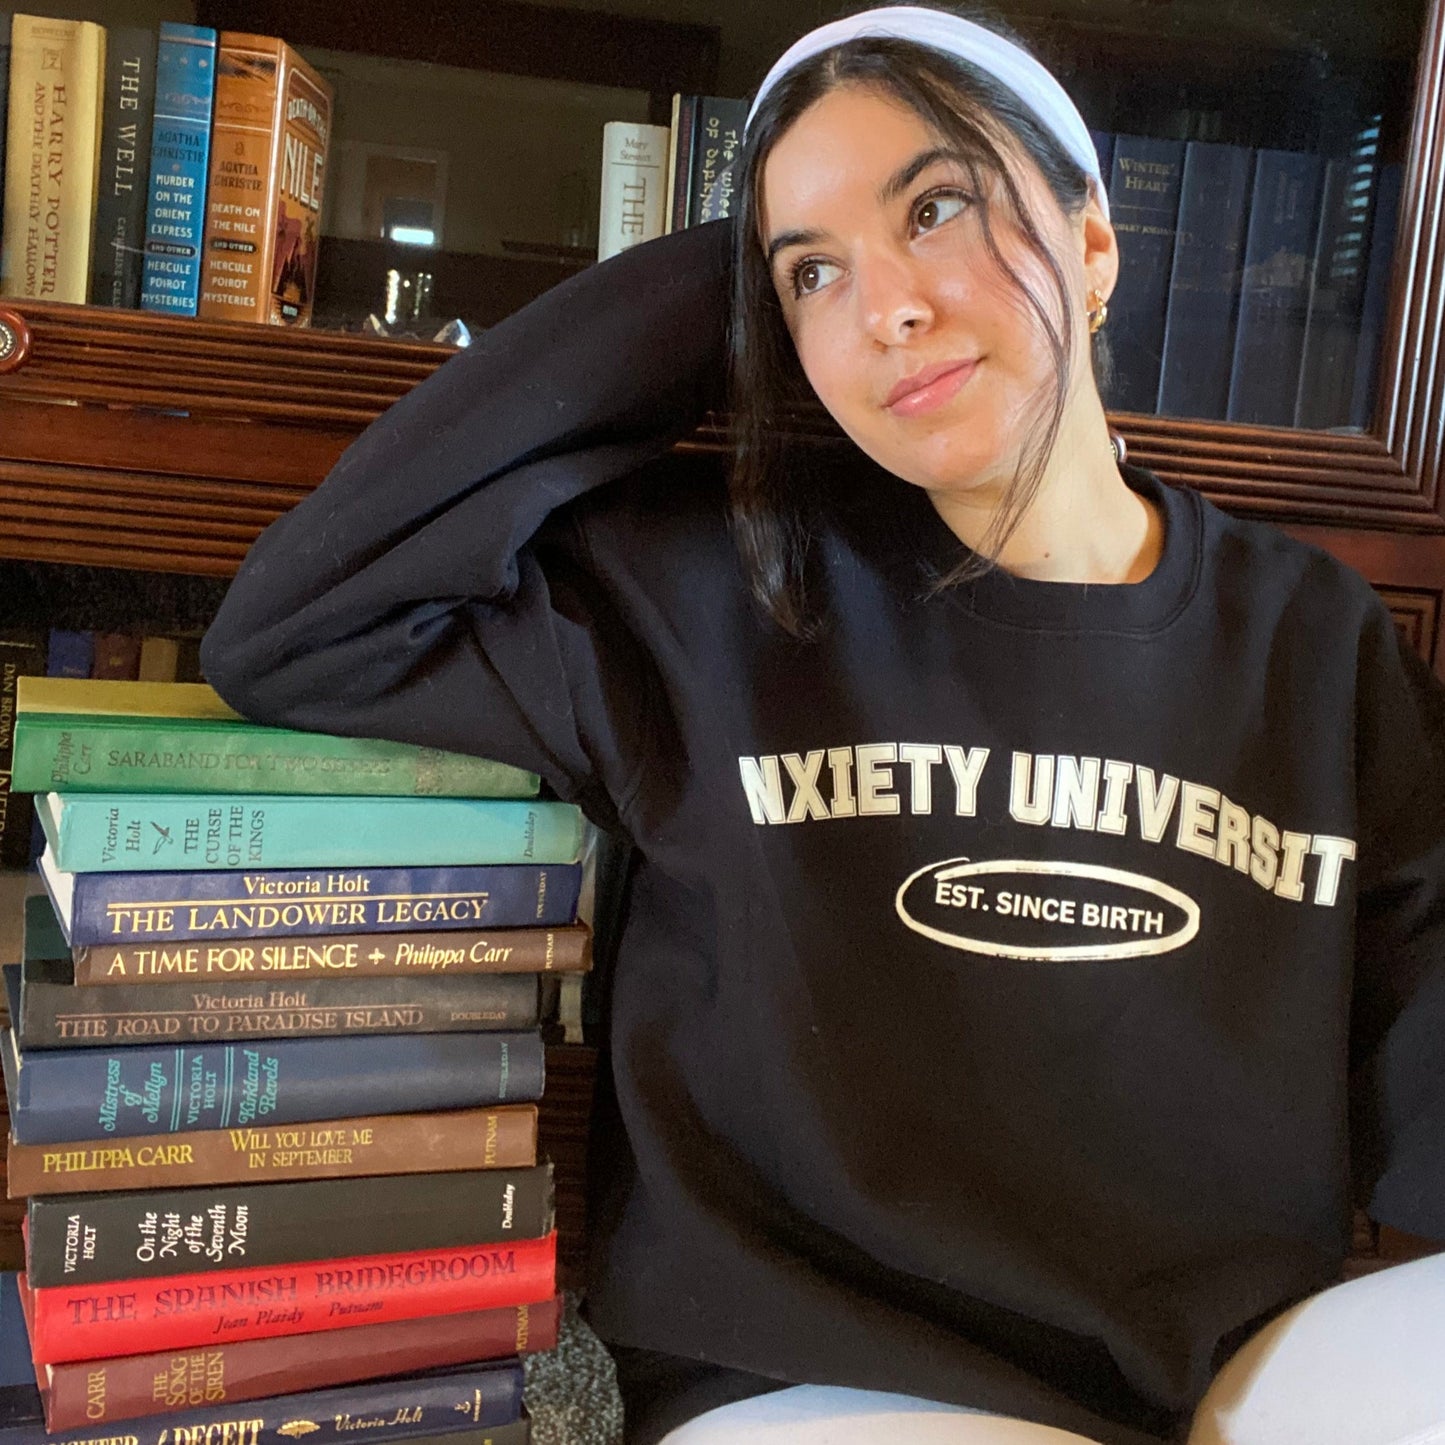 Anxiety University Crewneck Sweatshirt